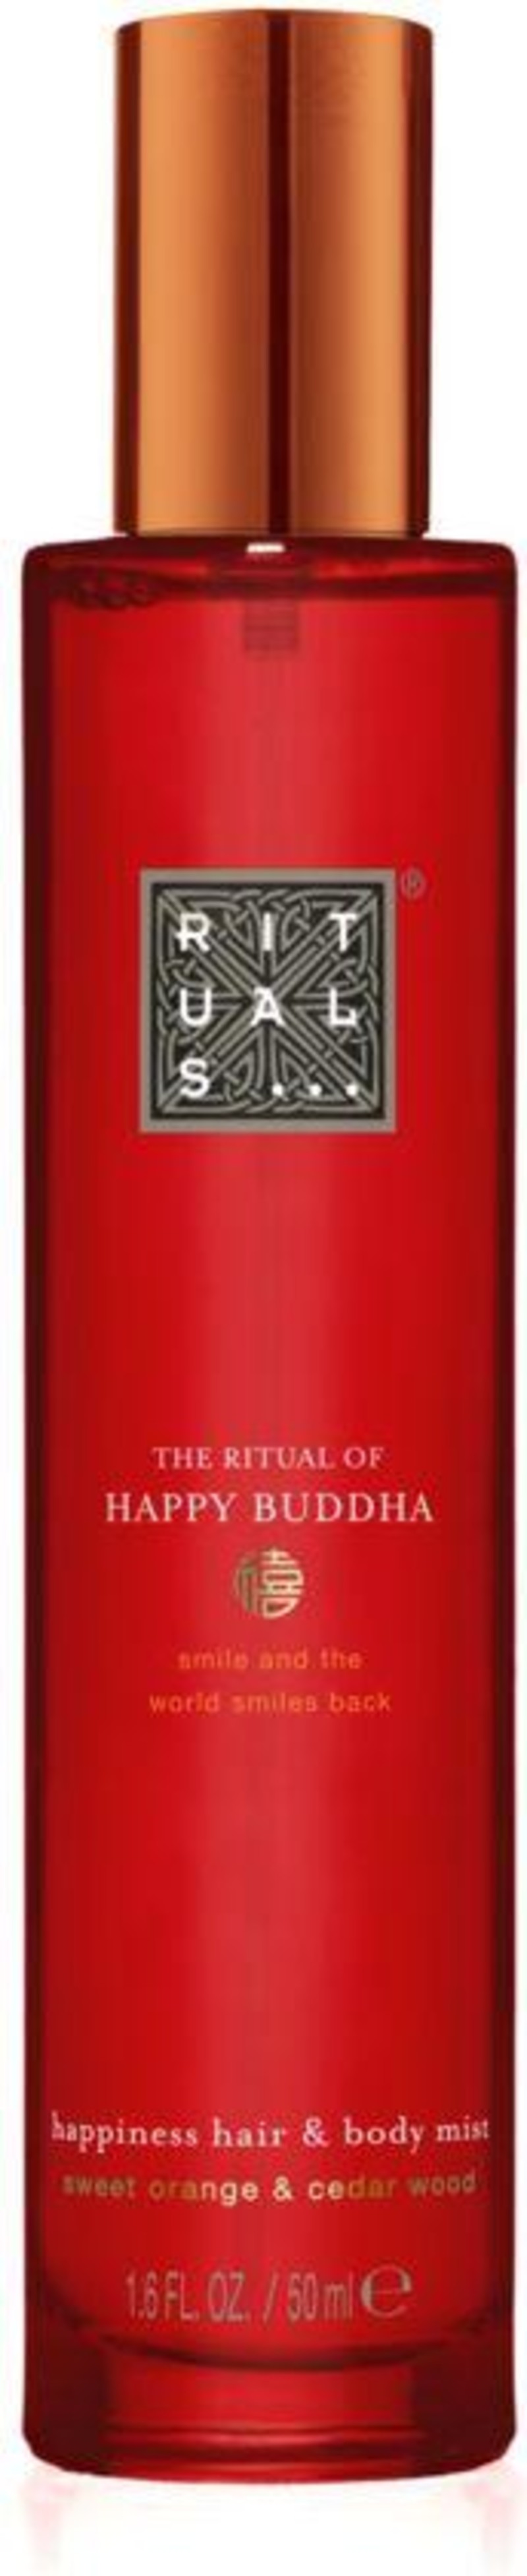 Rituals The Ritual Of Happy Buddha Hair & Body Mist Spray corps -  ®